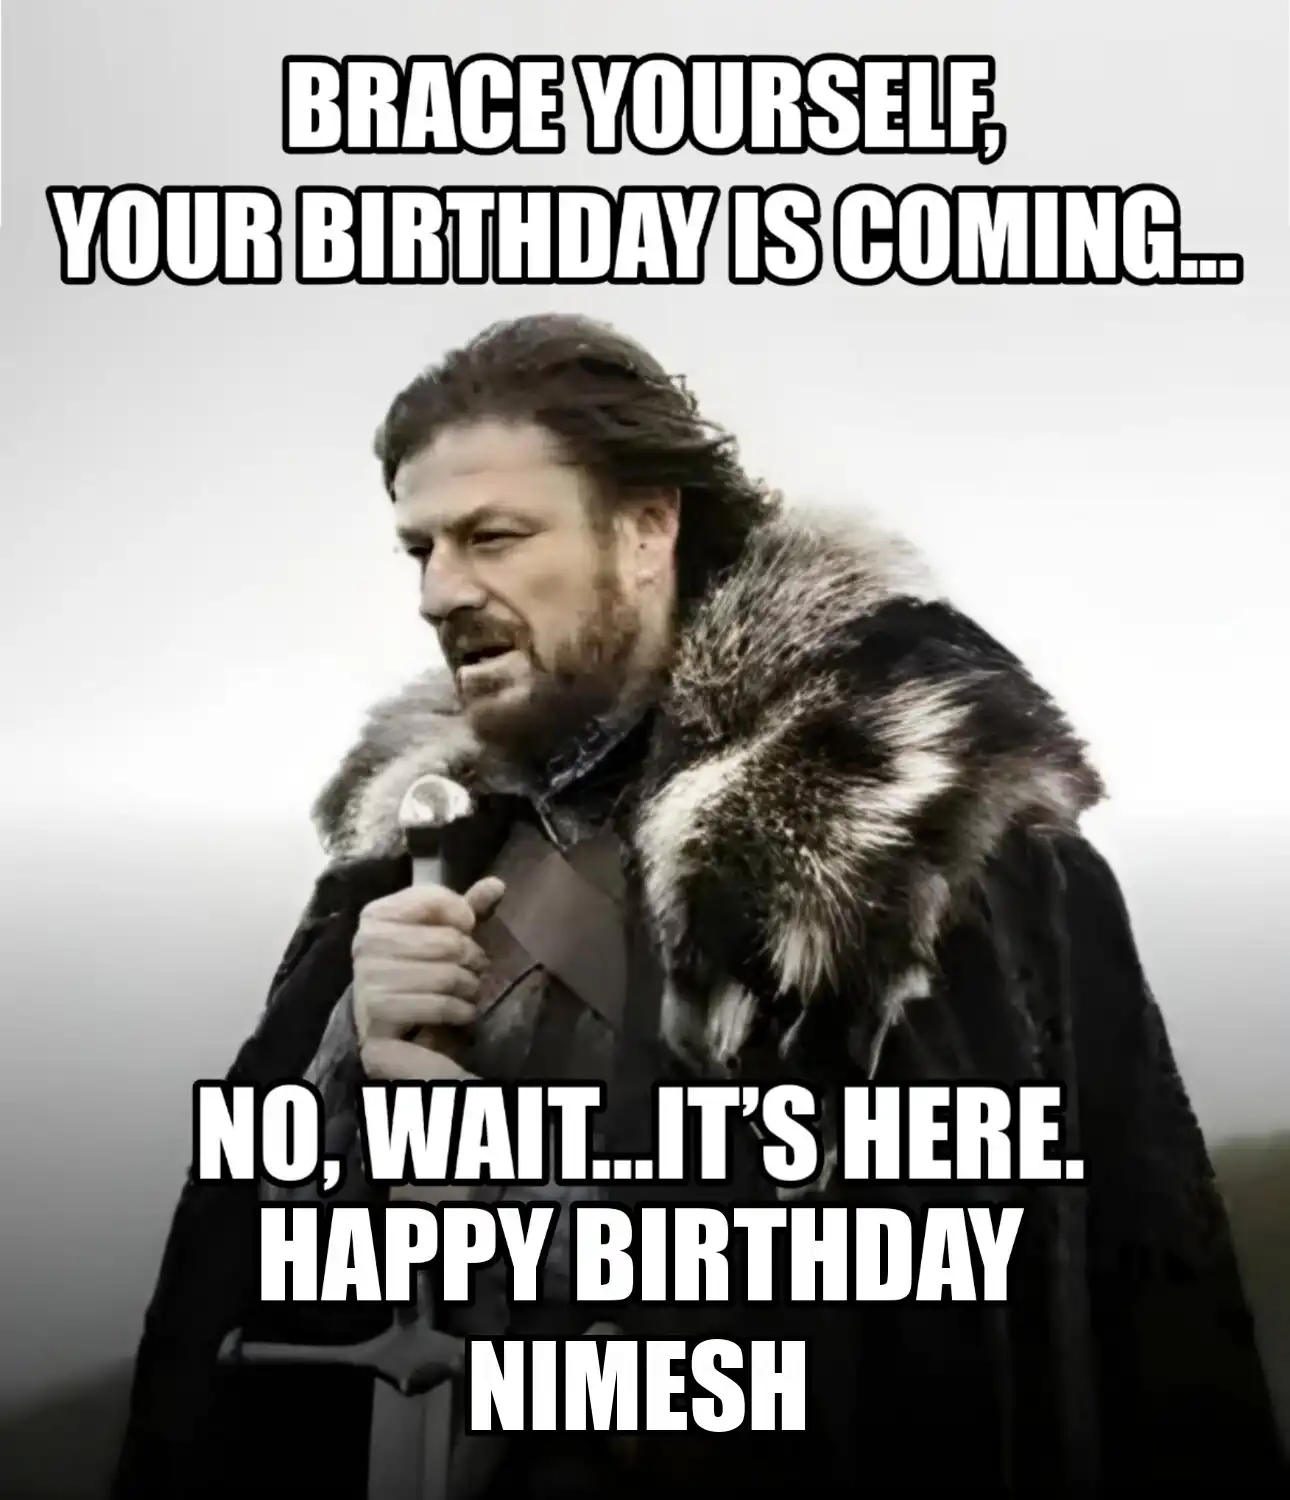 Happy Birthday Nimesh Brace Yourself Your Birthday Is Coming Meme